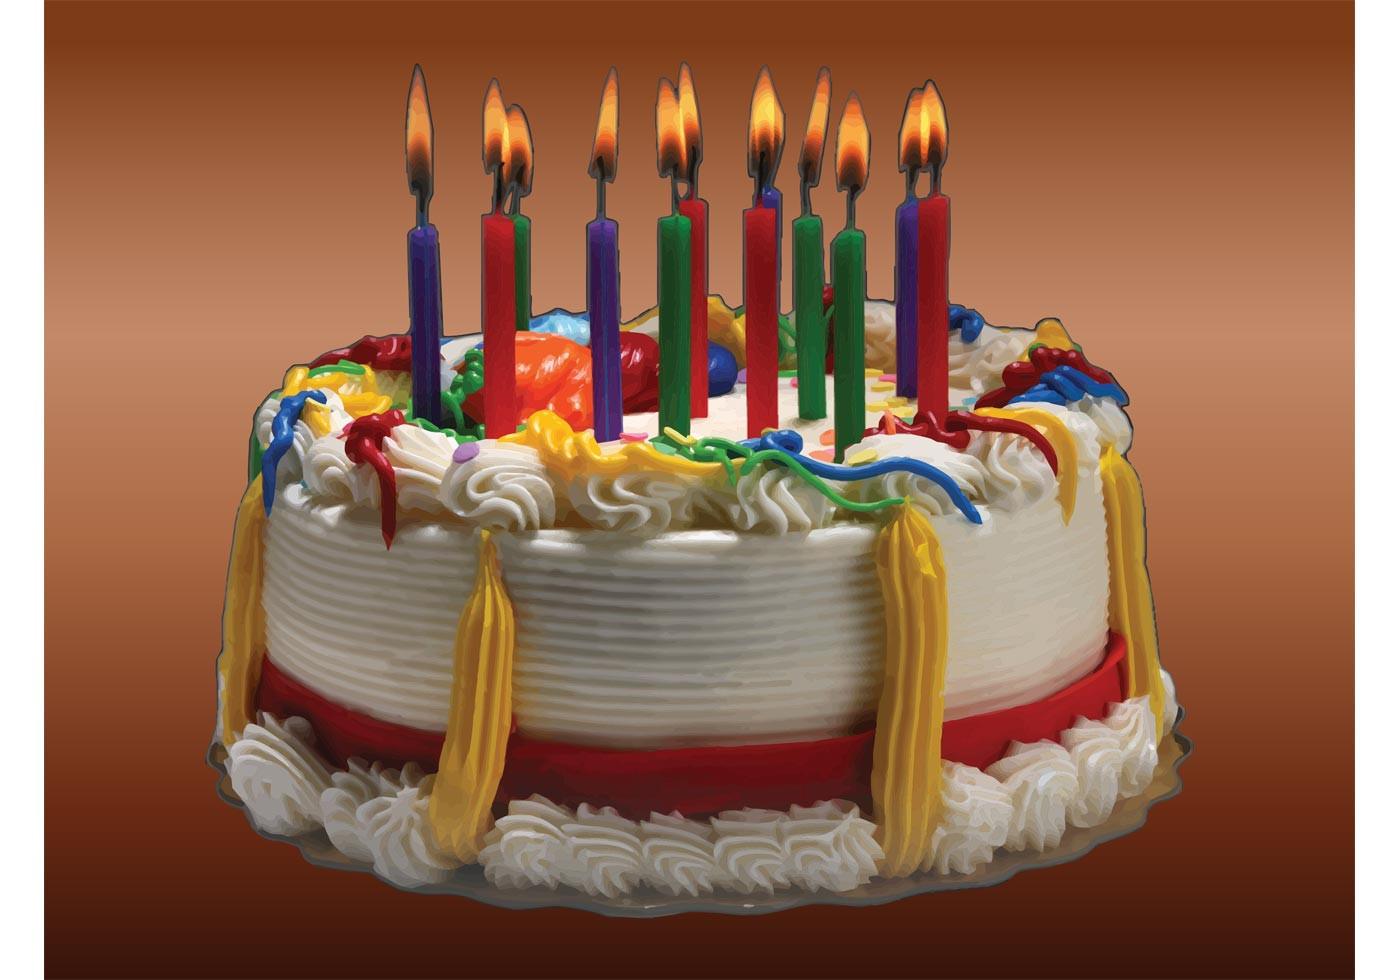 Birthday Cake Graphic
 Birthday Cake Image Download Free Vector Art Stock